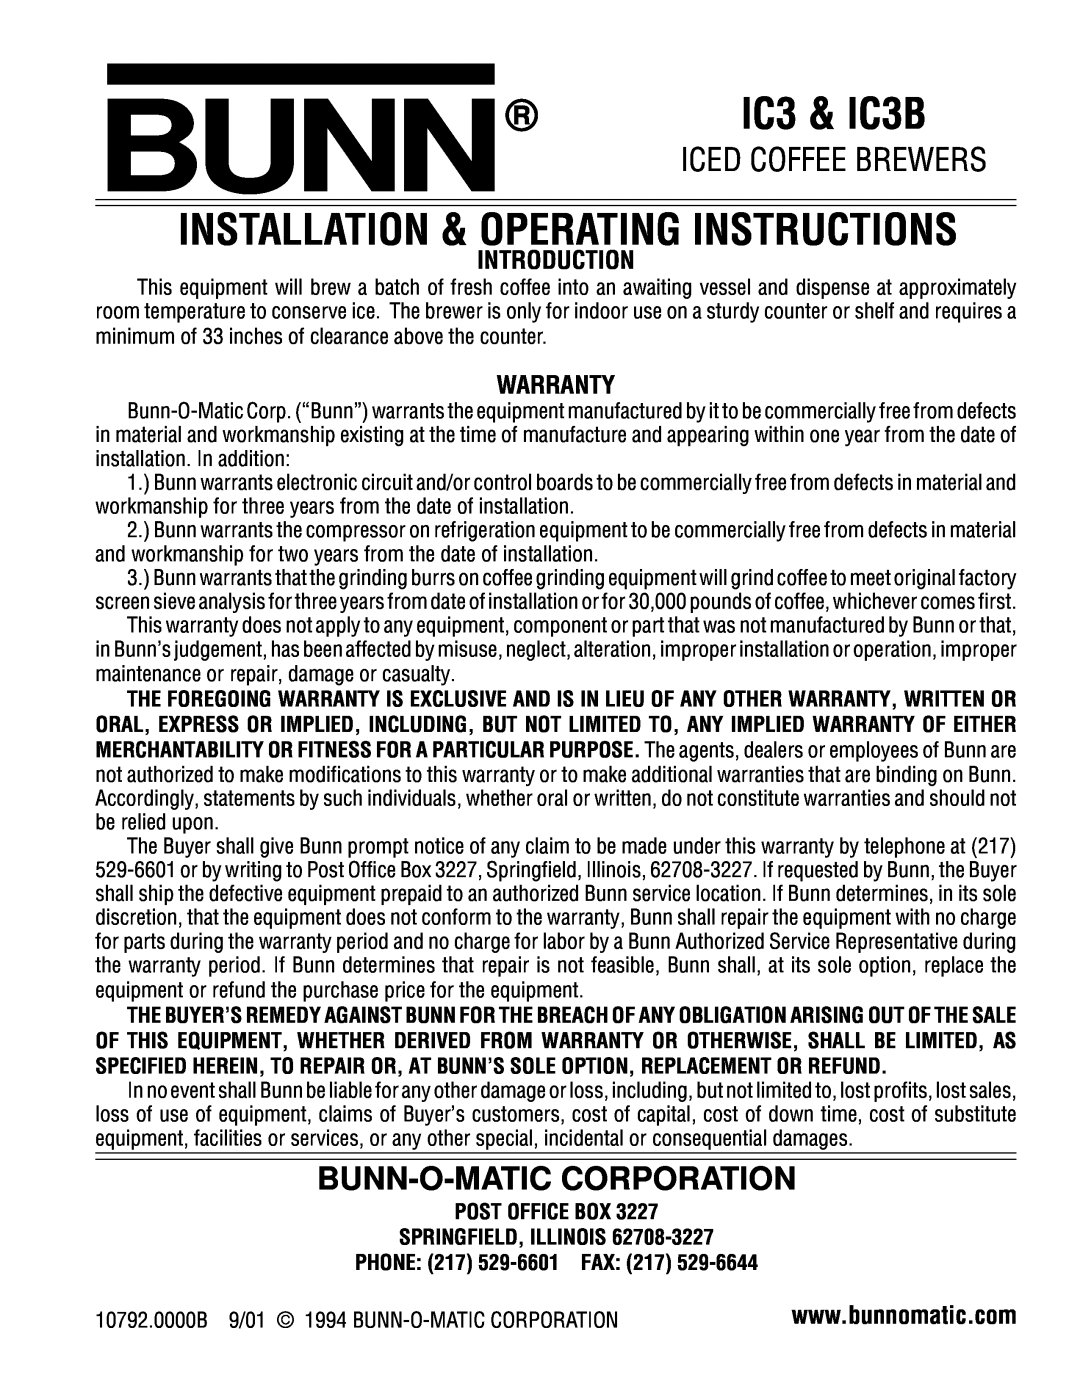 Bunn service manual Bunn-O-Matic Corporation, IC3 & IC3B, Installation & Operating Guide, Full, Read 